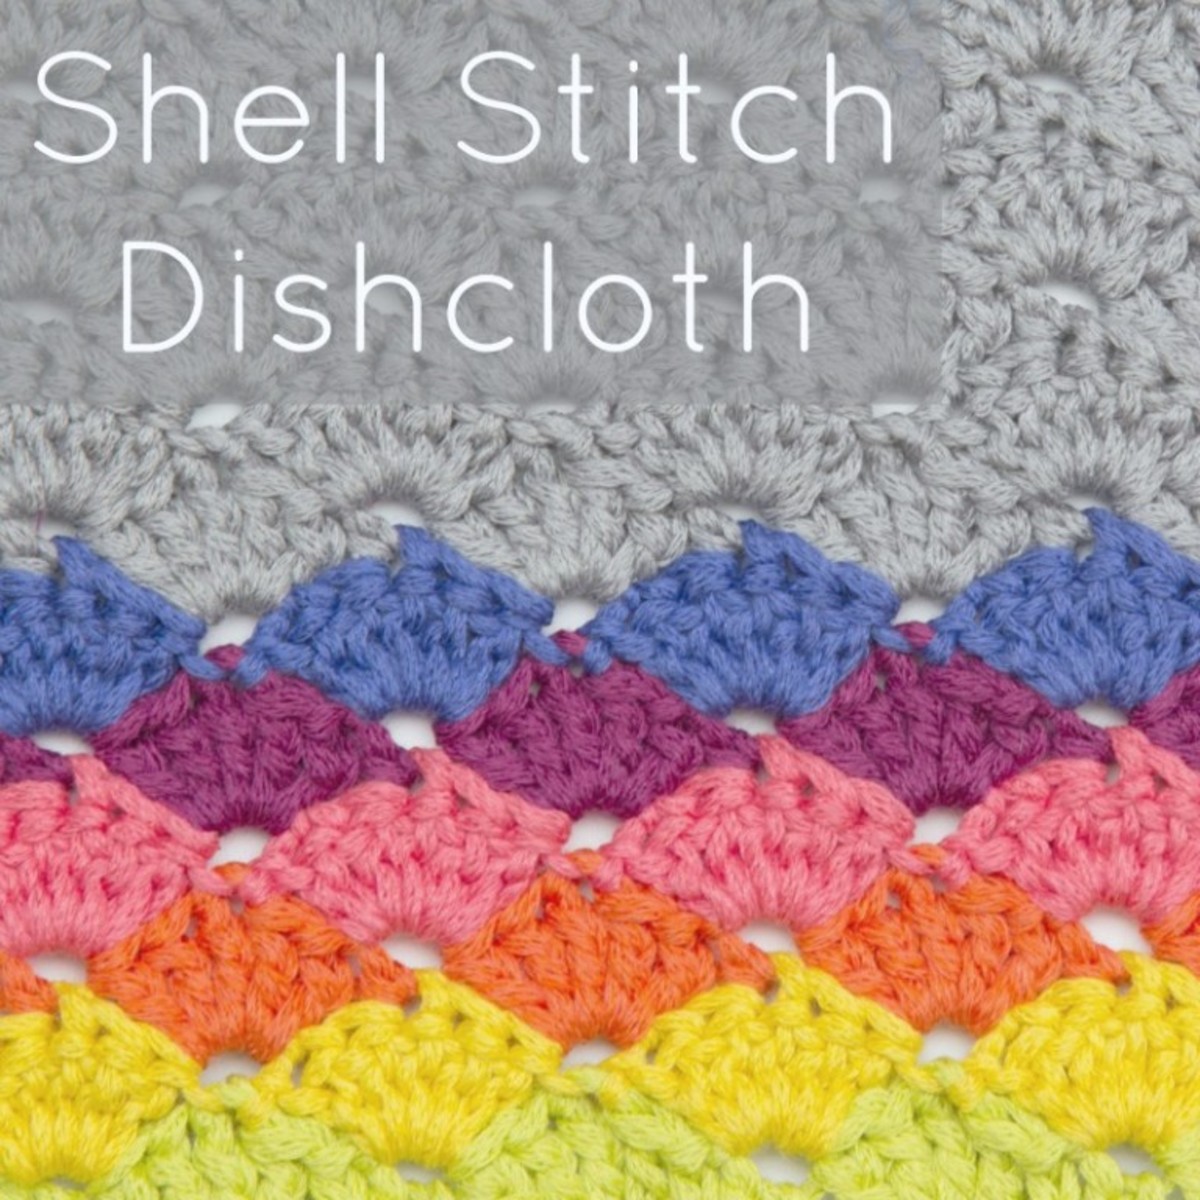 Crunchy Stitch Crochet Dishcloth Pattern - Petals to Picots